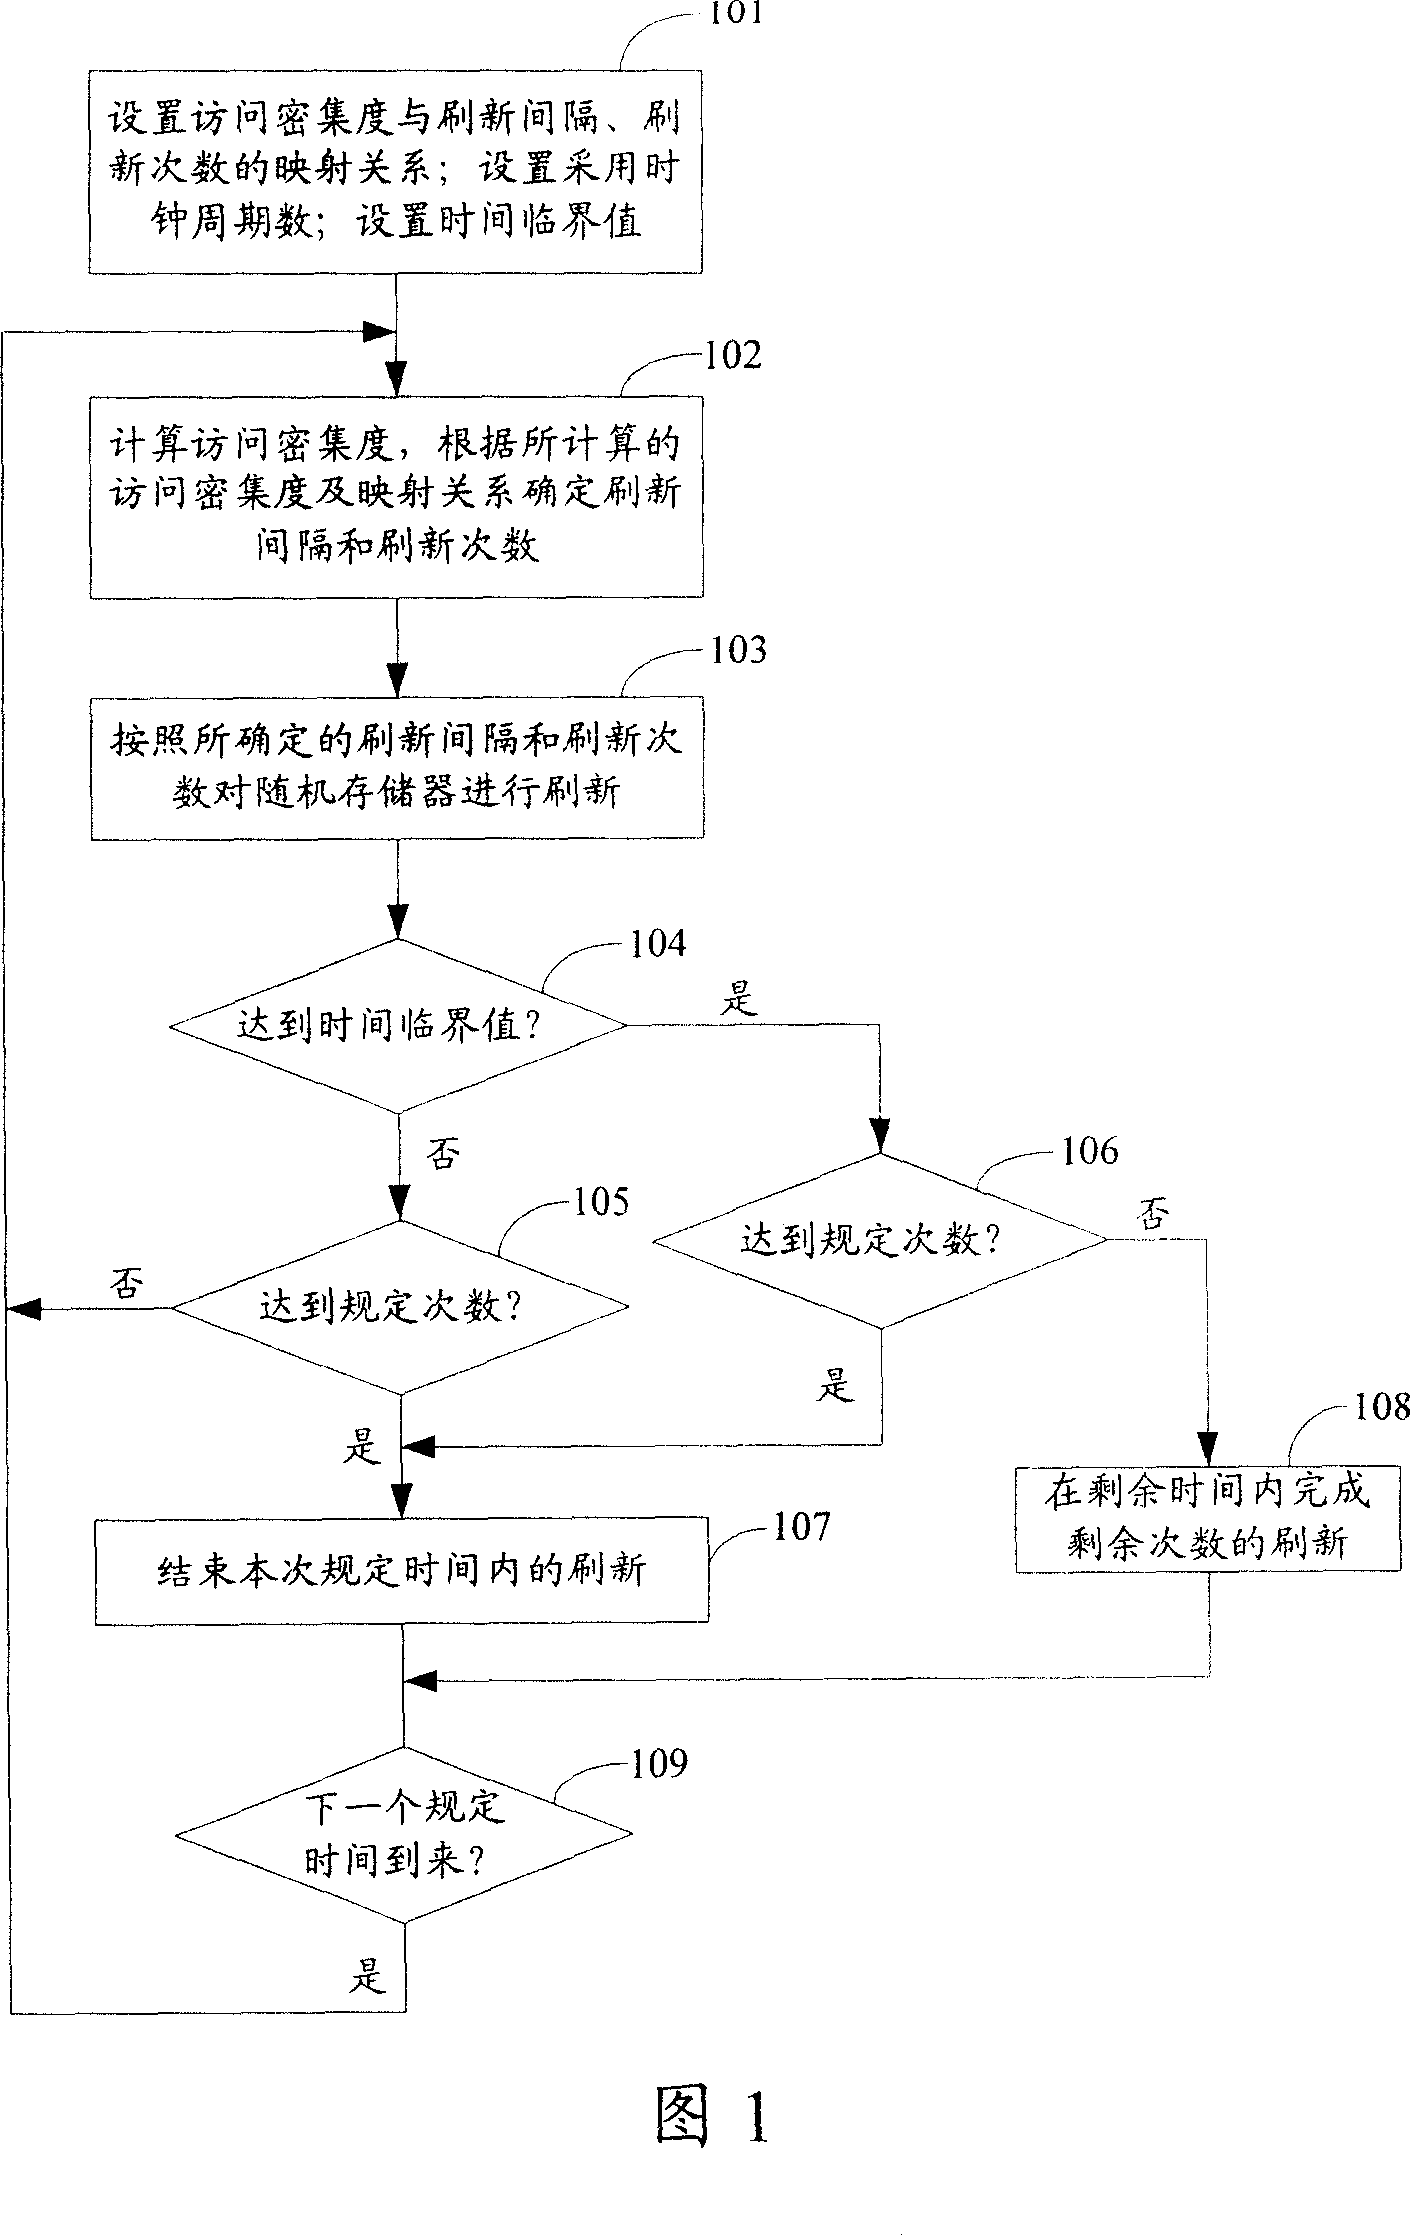 Refurbishing method and device of random memorizer